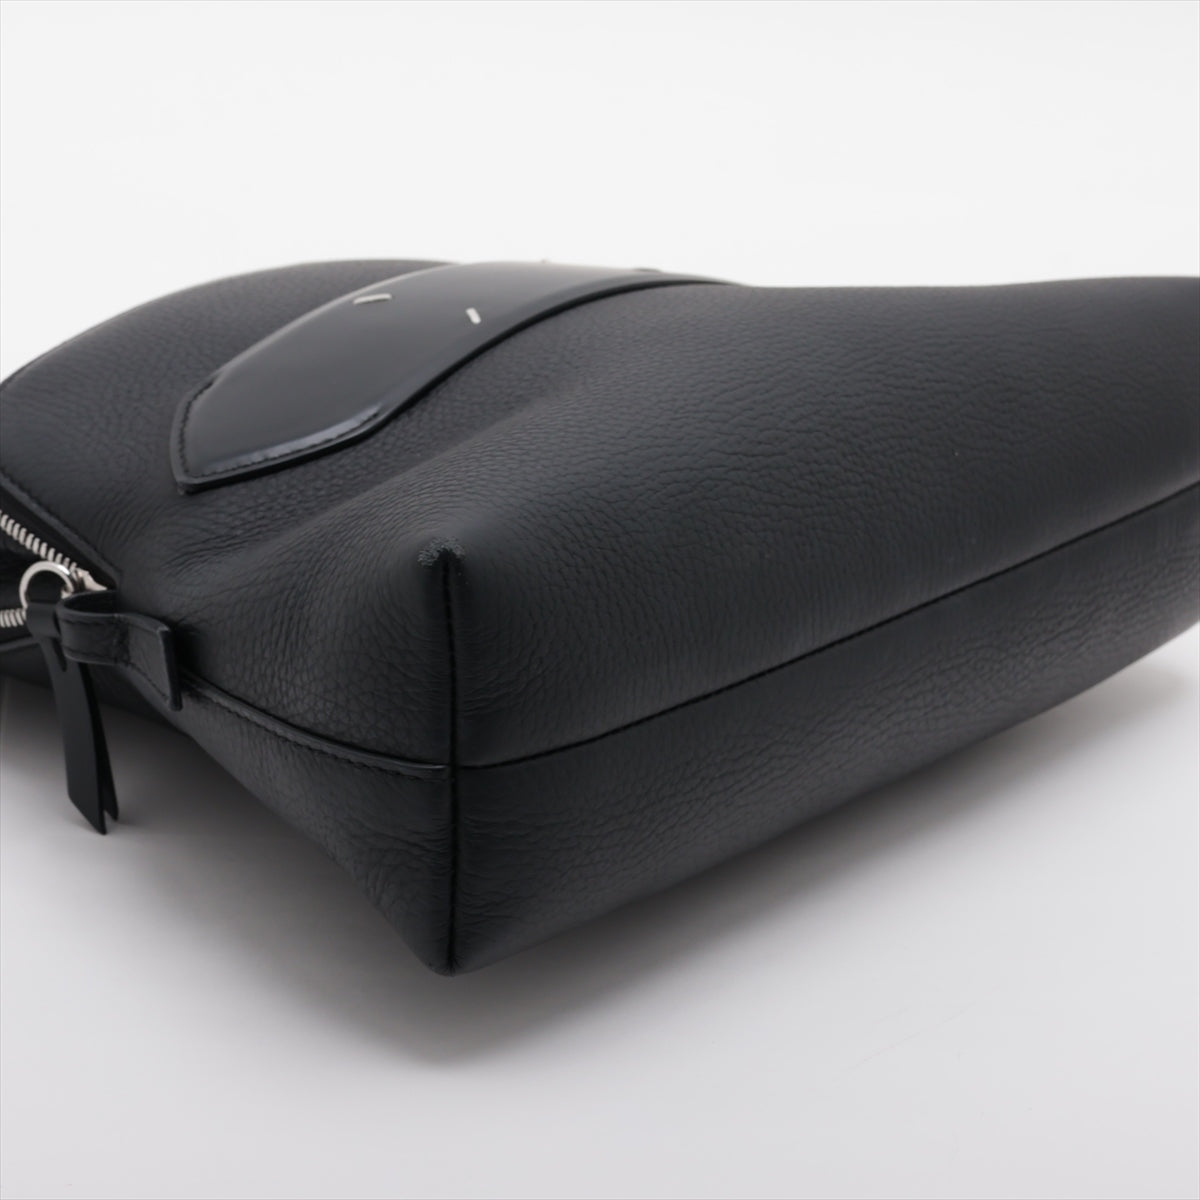 Maison Margiela 5AC Leather Shoulder bag Black